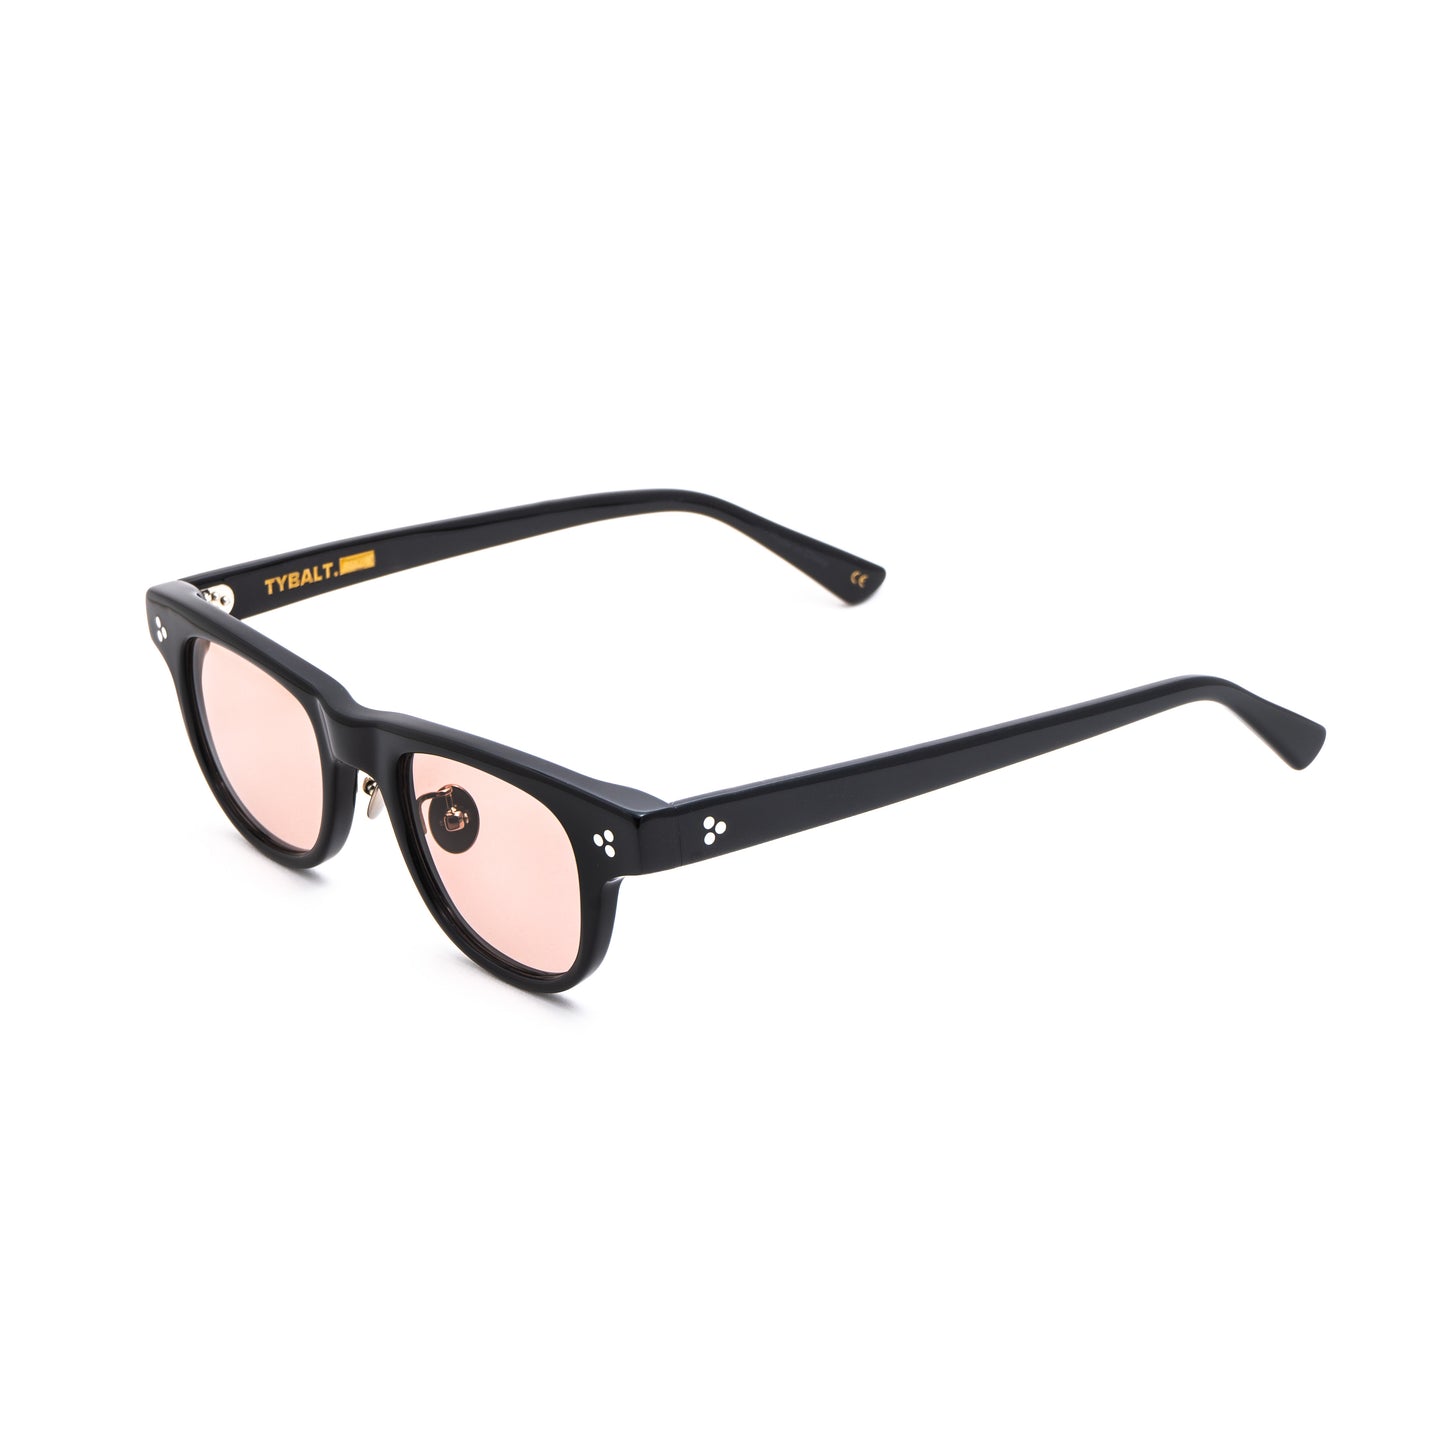 cassio - Sunglasses Black